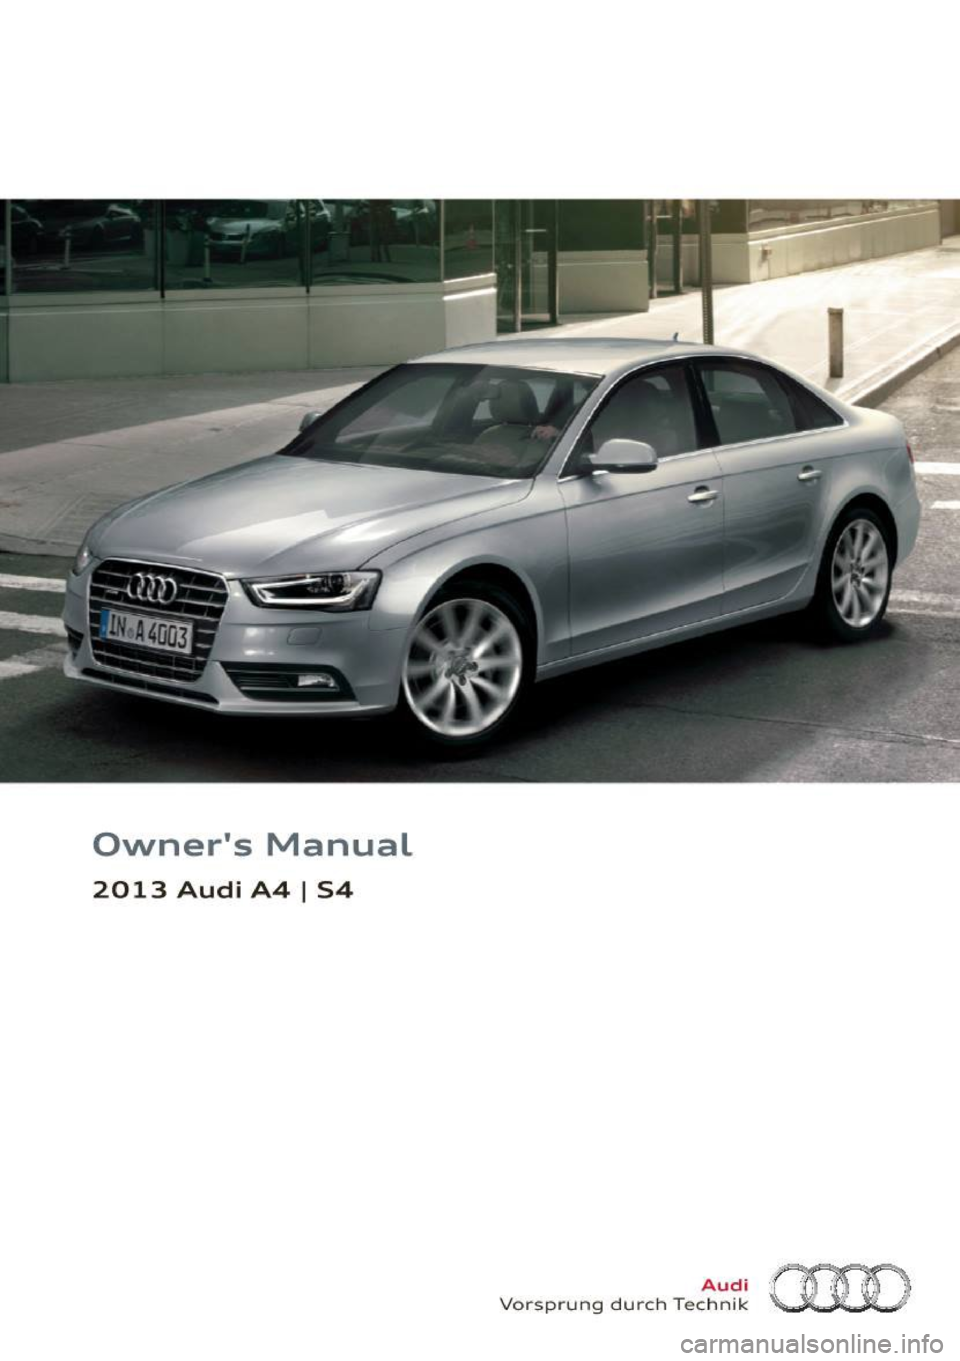 AUDI S4 2013  Owners Manual Owners  Manual 
2013 Audi  A4 I S4 
Vorsp rung  du rch  Tec~~f~ (HO  